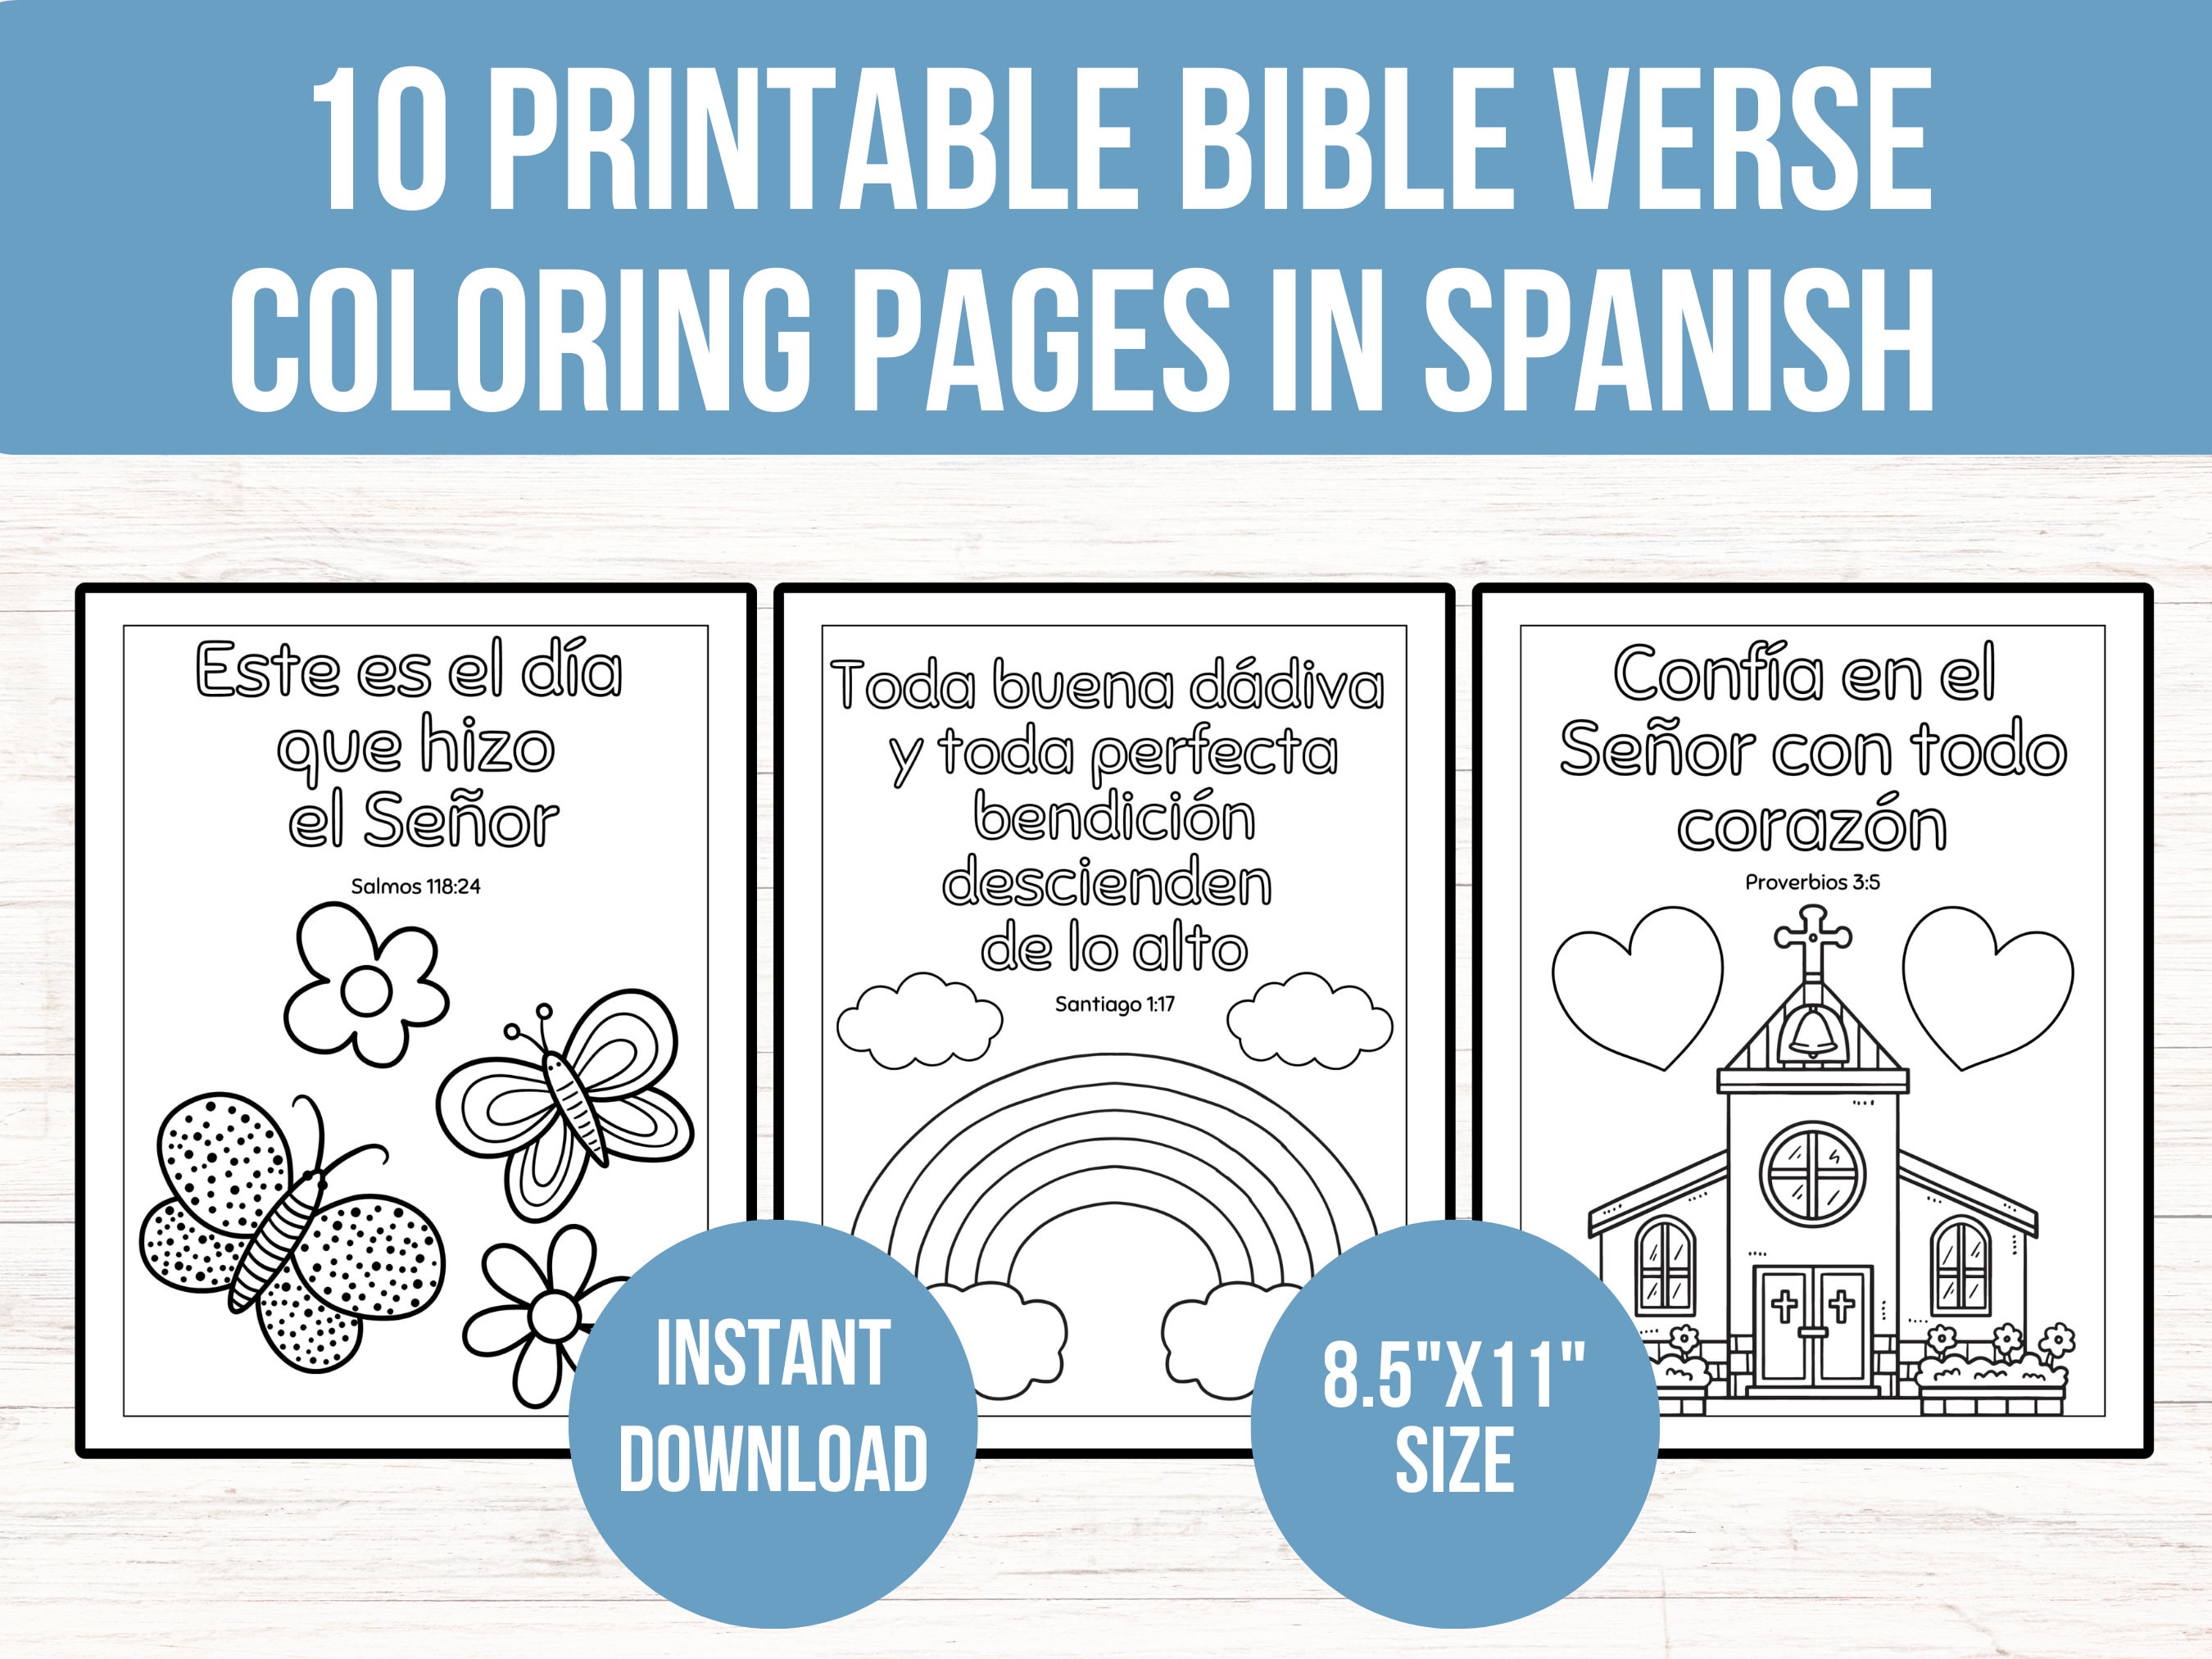 Sunday school coloring pages in spanish preschool bible verses en espaãol homeschool coloring sheets bible activities for kids download now